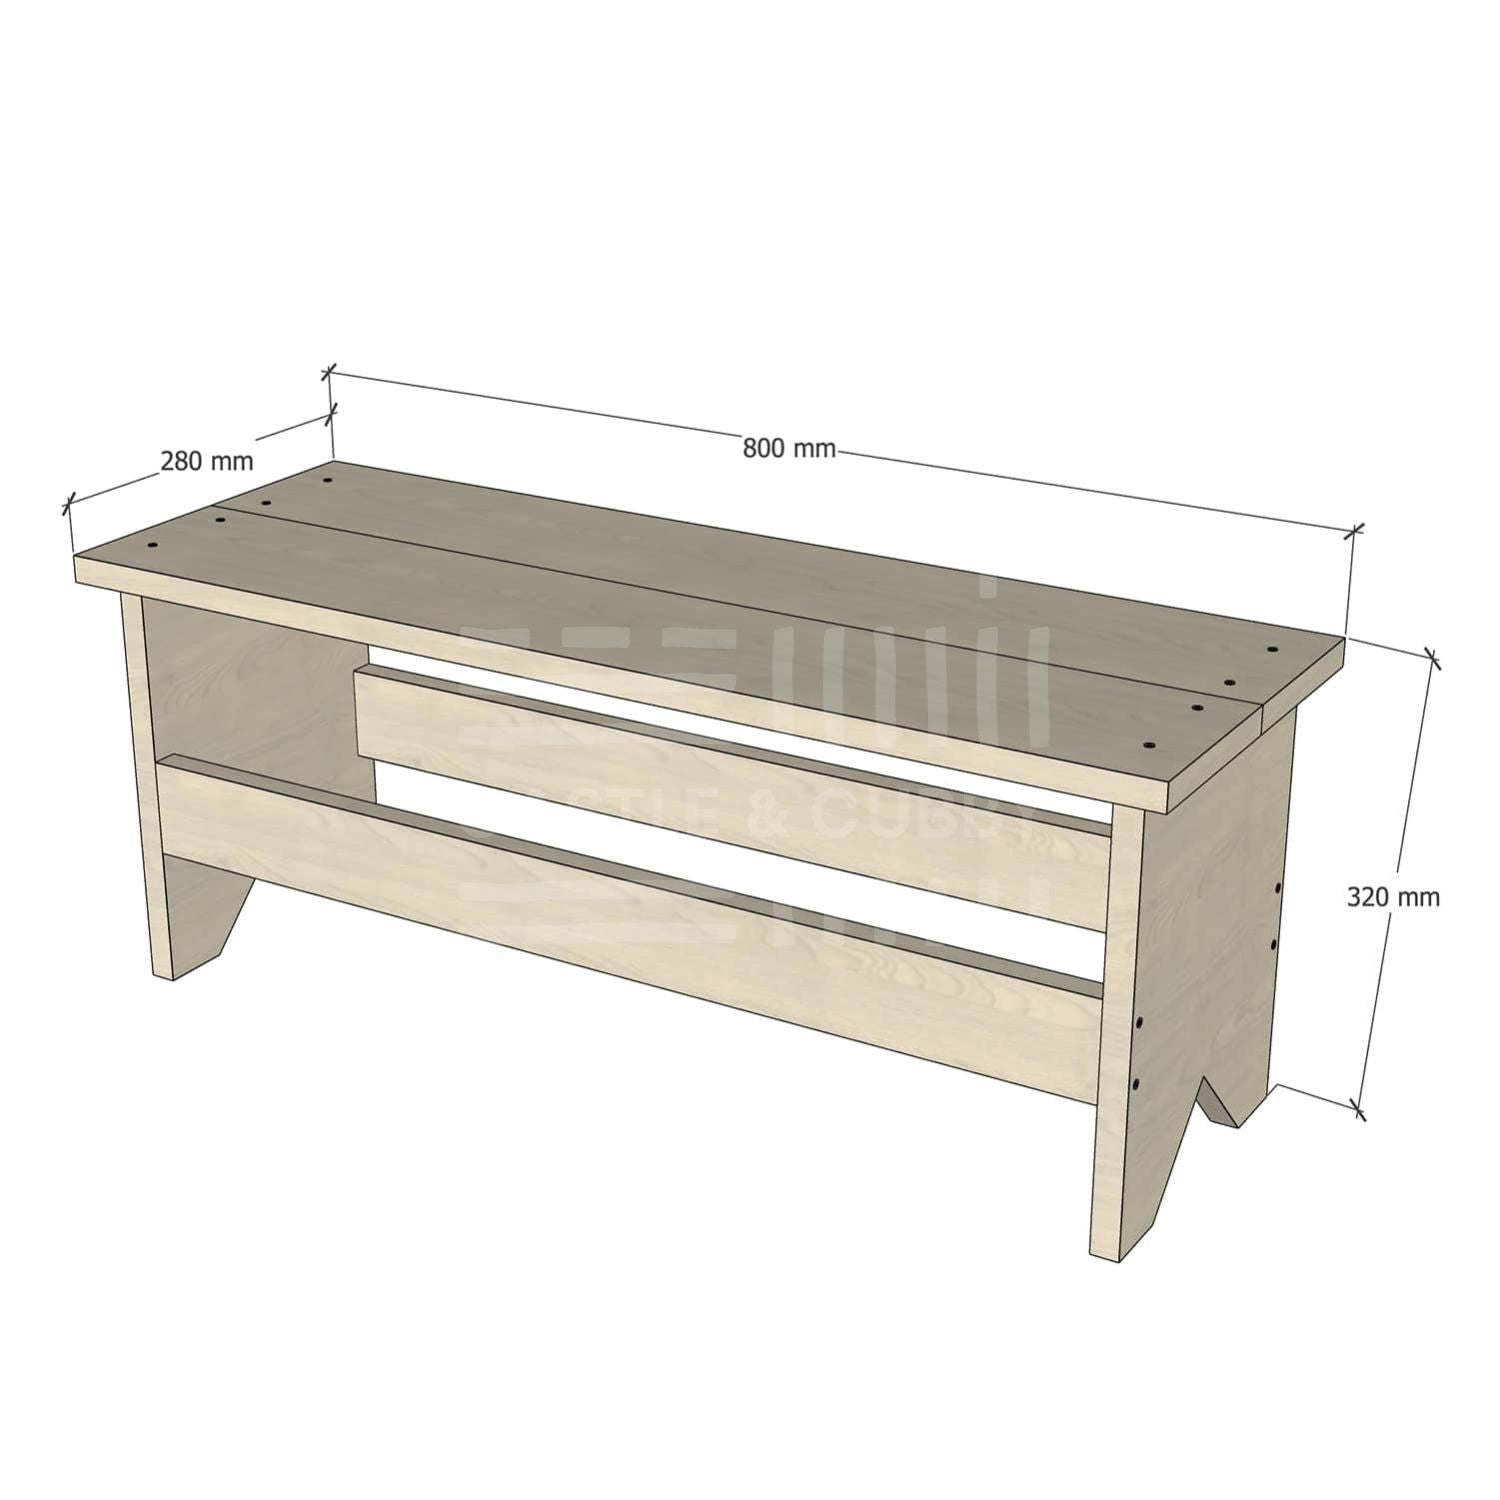 Pine large size carpenter stool w dimensions